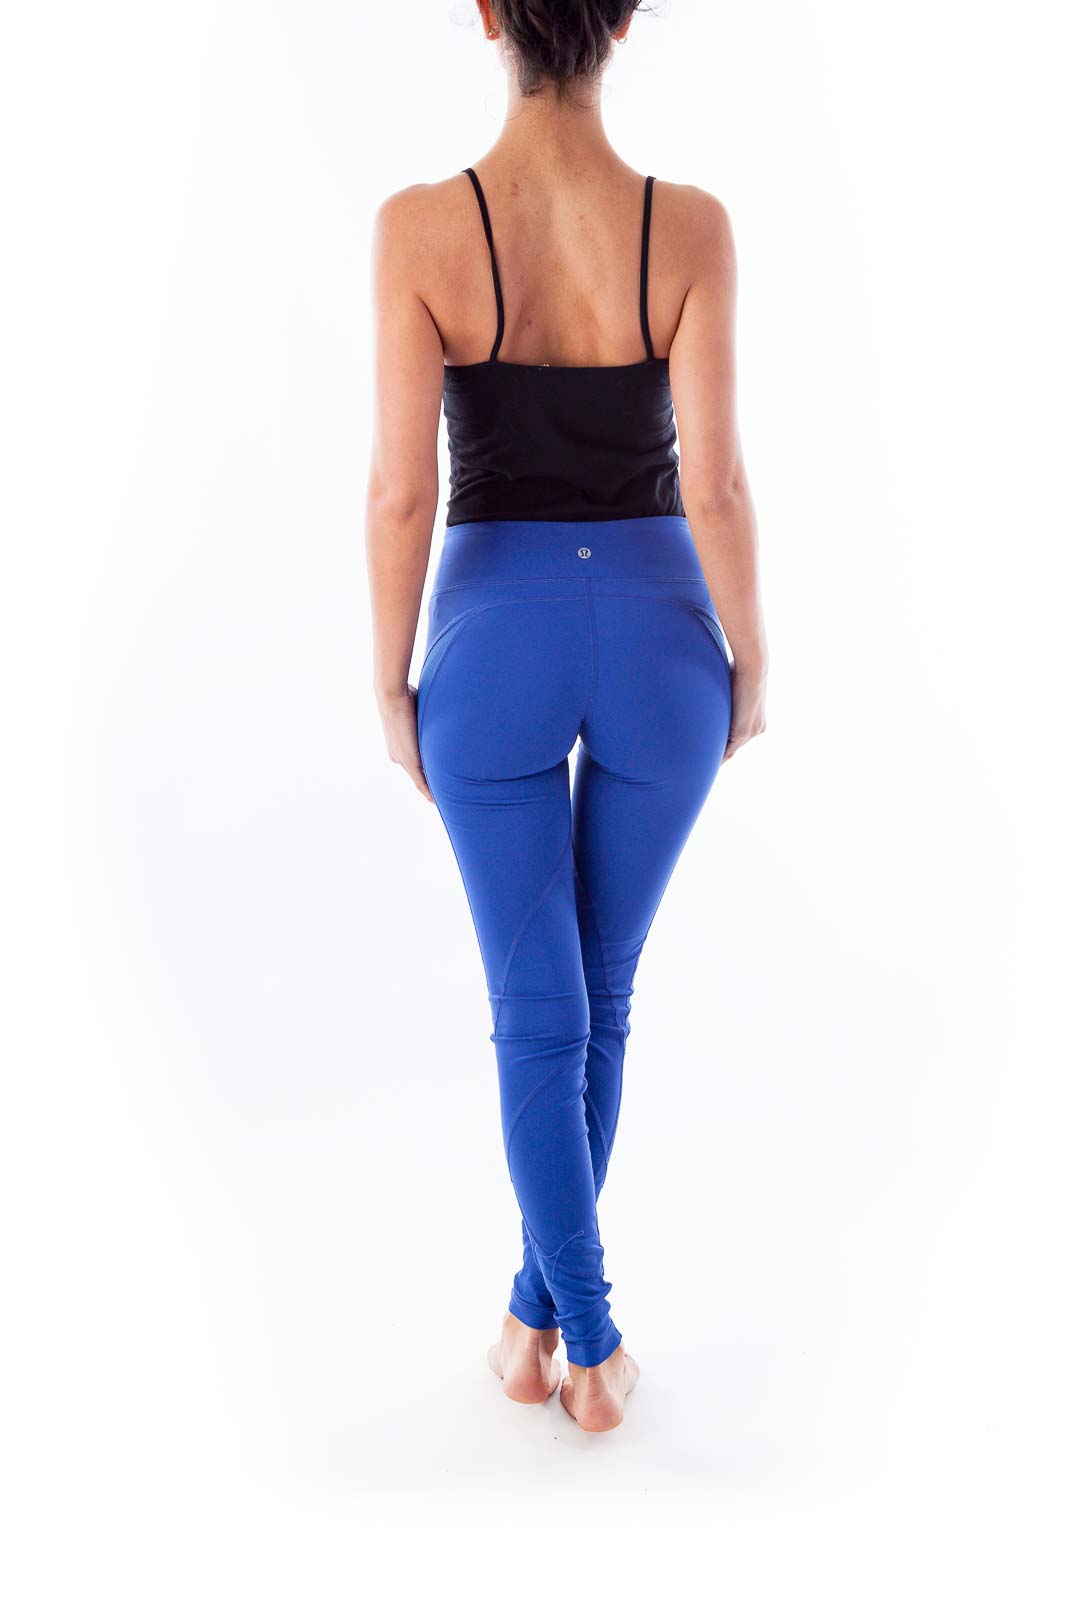 Lululemon - Royal Blue Yoga Pants Unknown